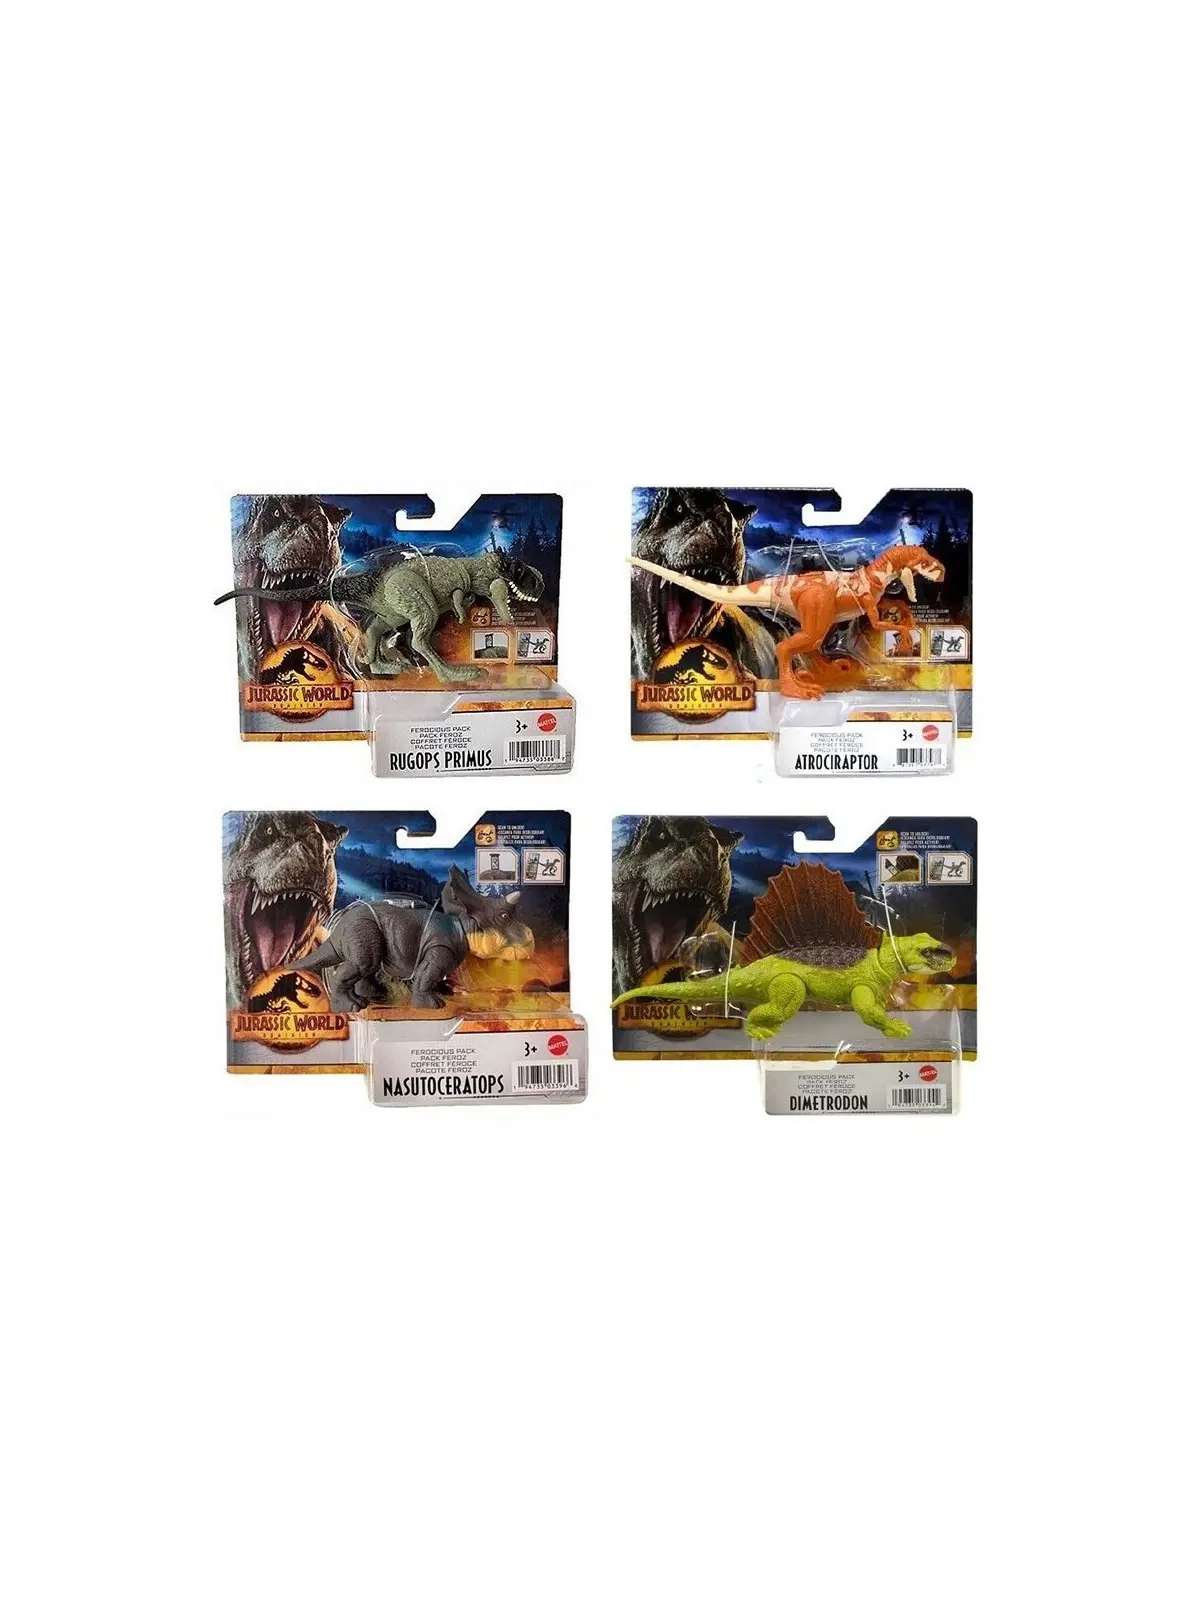 Jurassic World Ferocious Pack